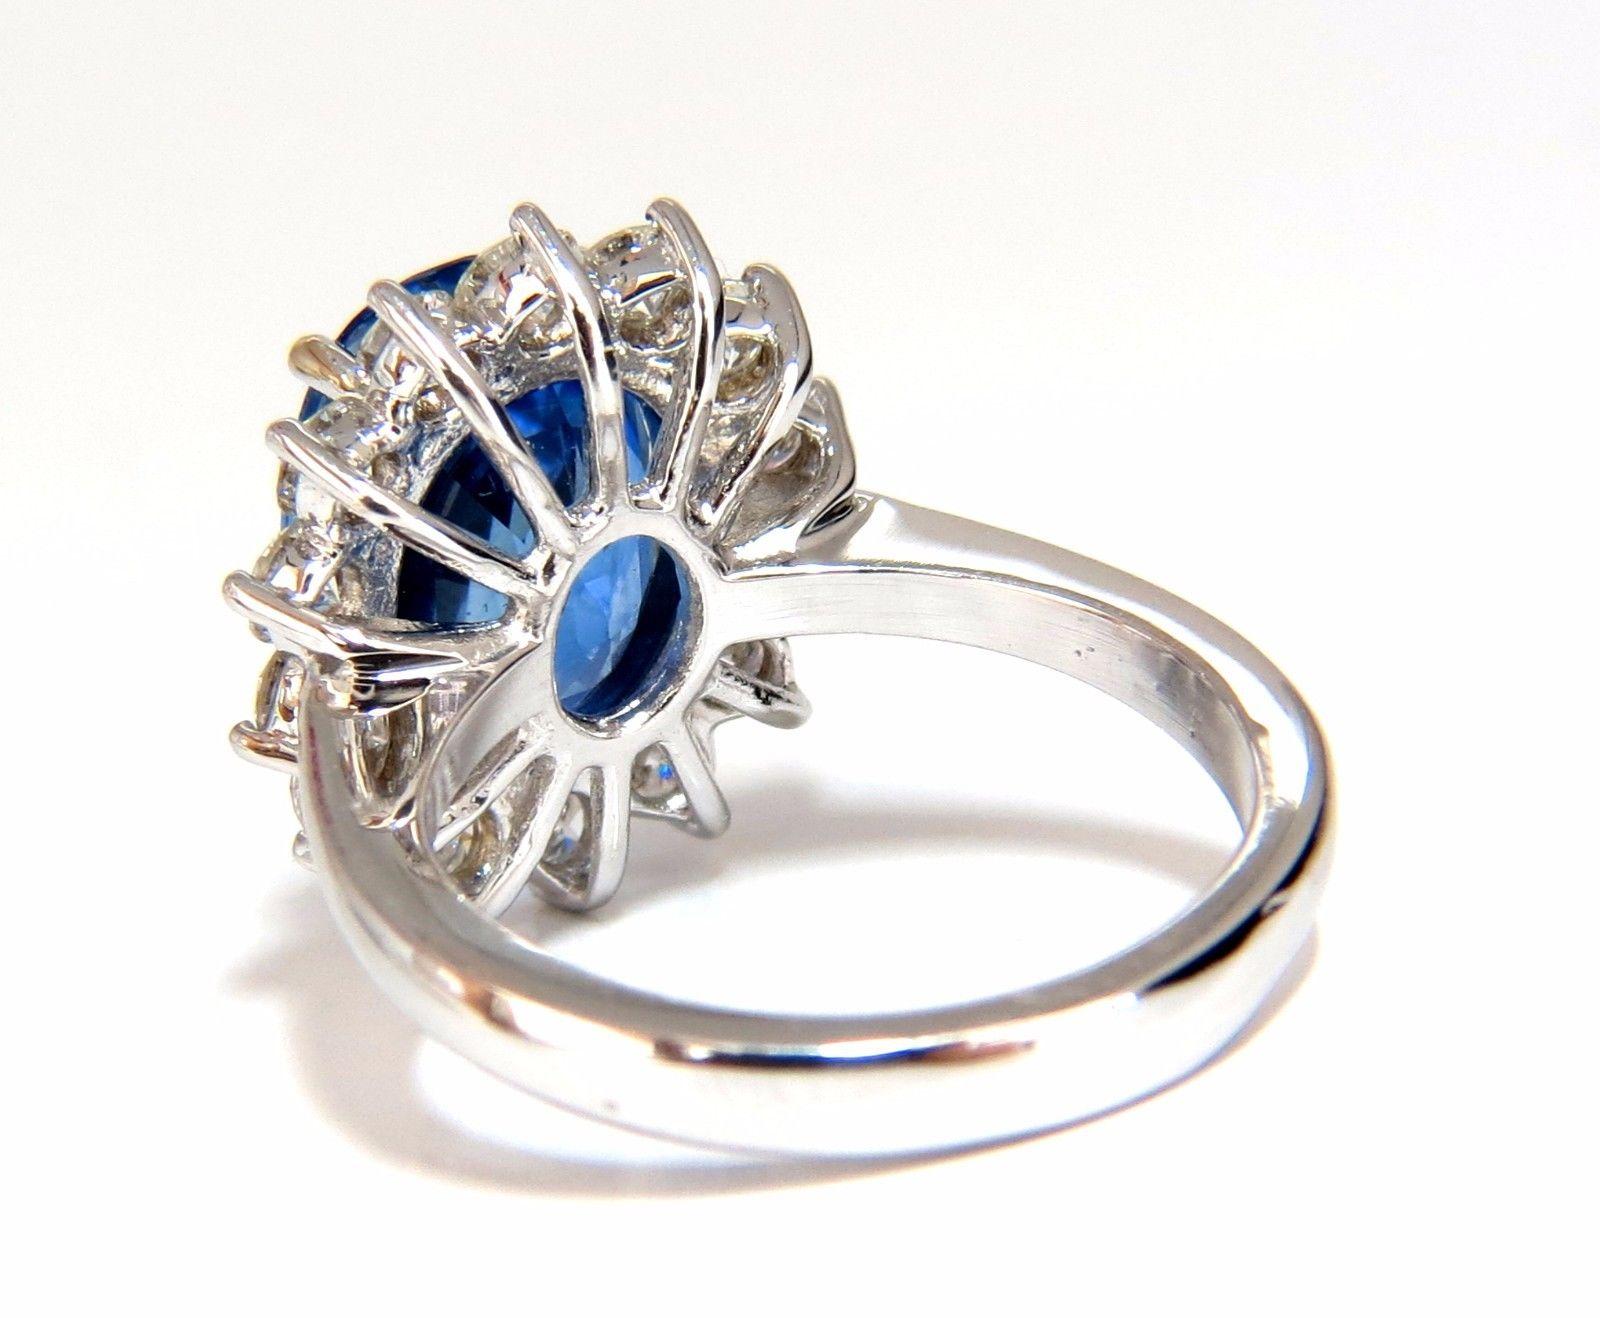 Cushion Cut GIA Certified 7.39 Carat Natural Blue Sapphire Diamond Ring 18 Karat